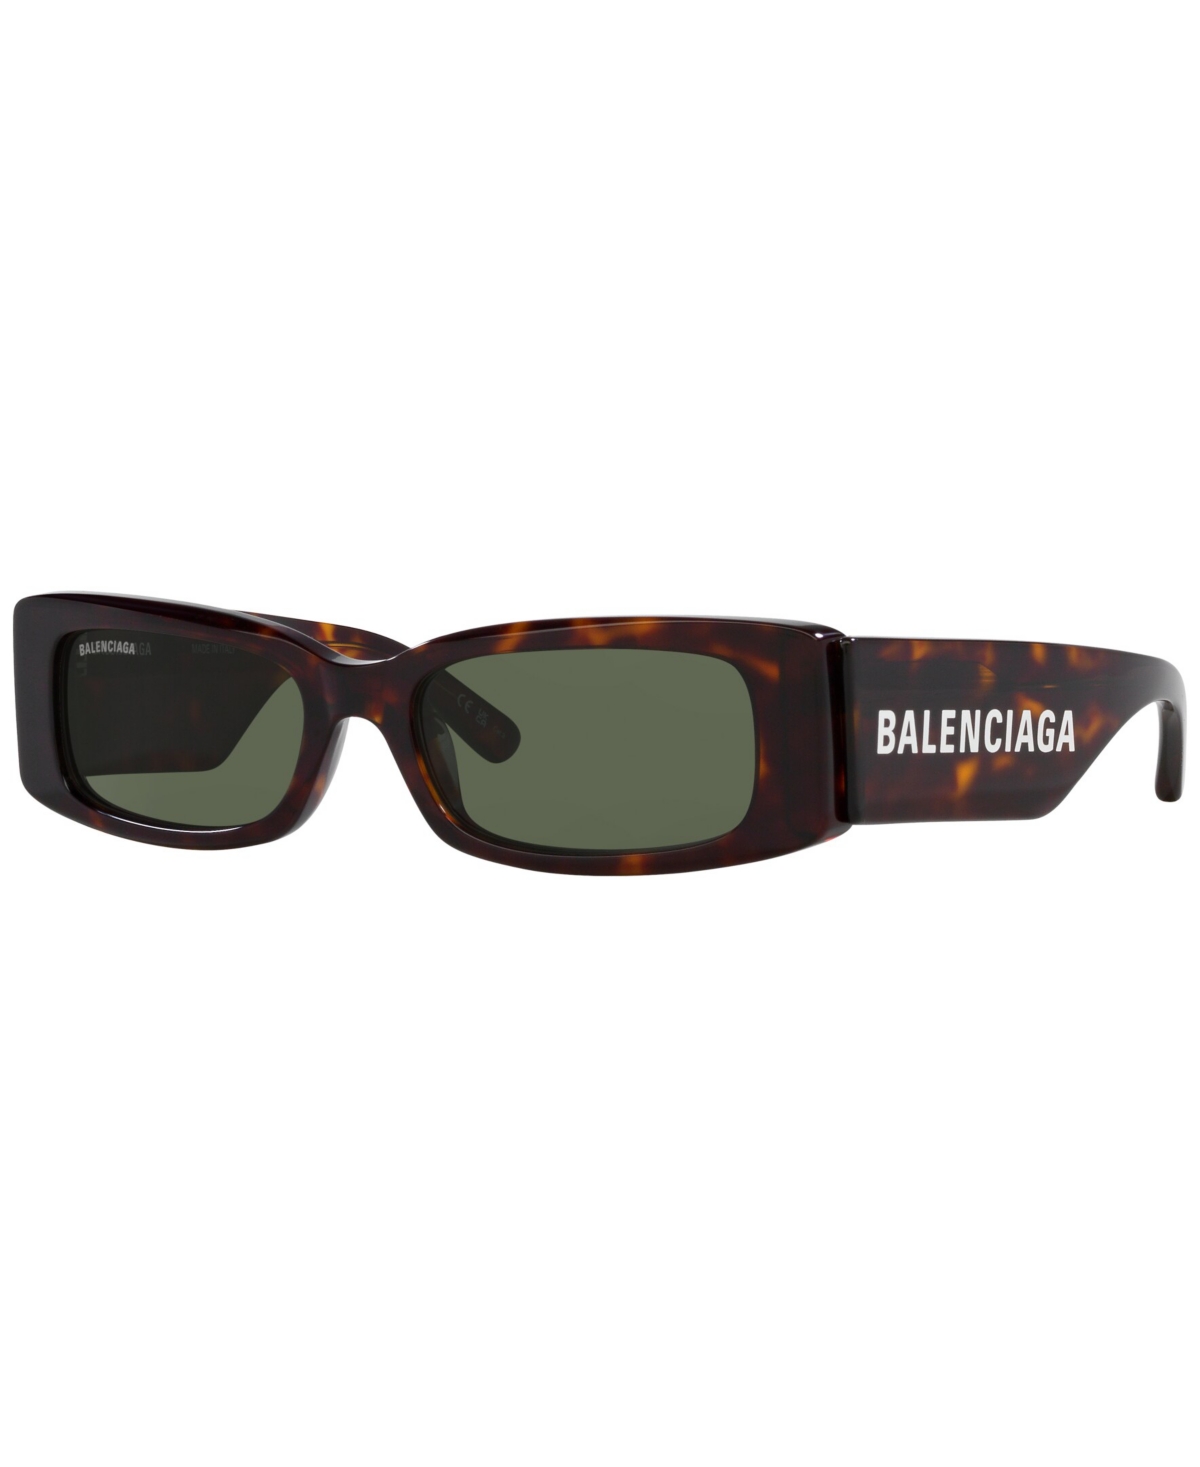 Balenciaga Women's Sunglasses, Bb0260s In Tortoise